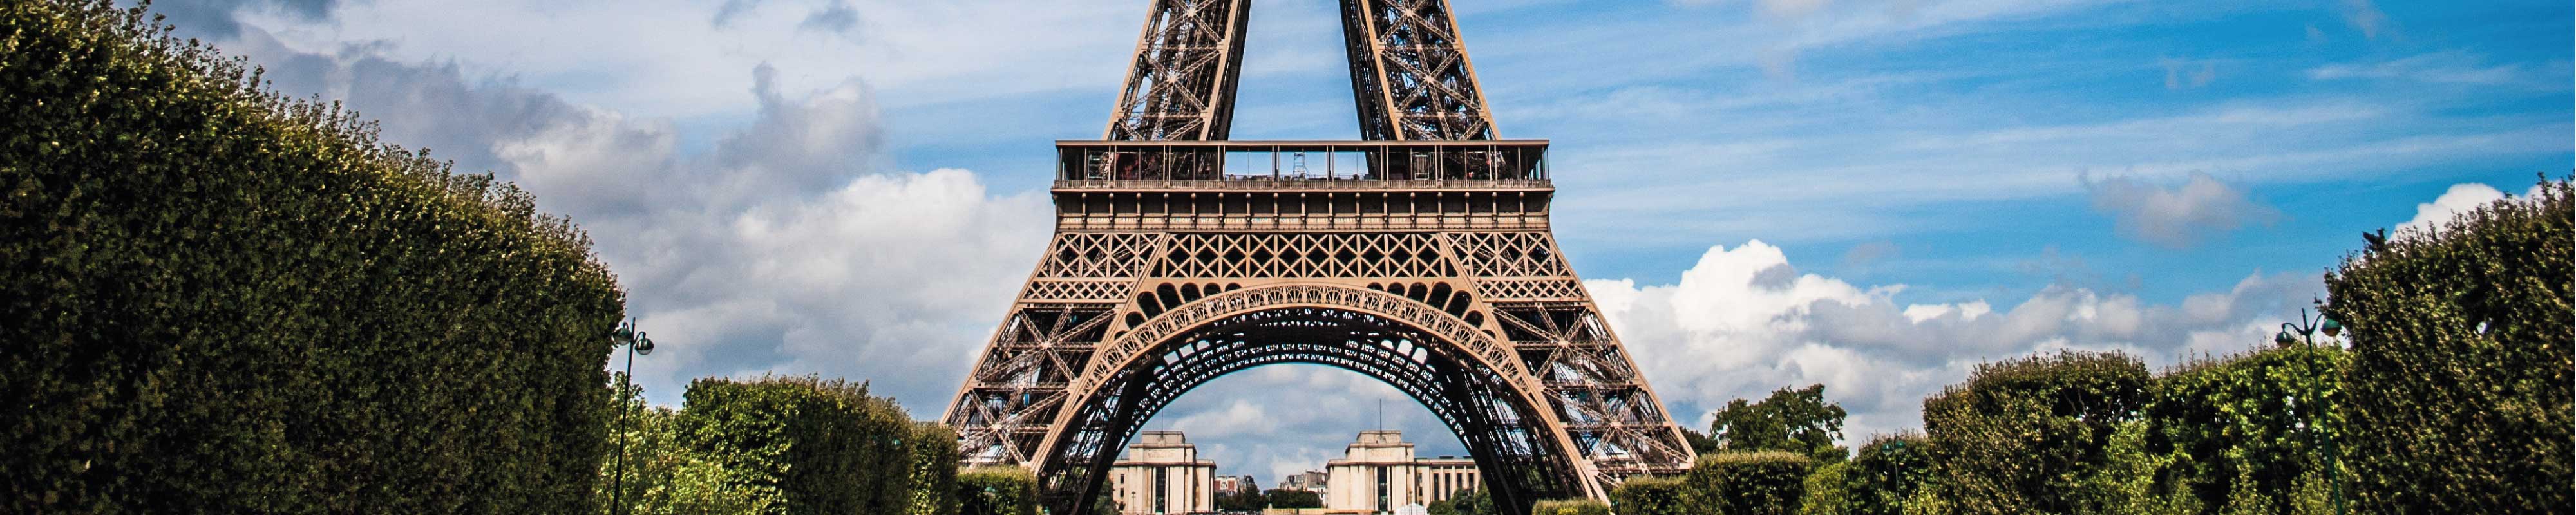 Luggage Storage | Eiffel Tower in Paris - Nannybag